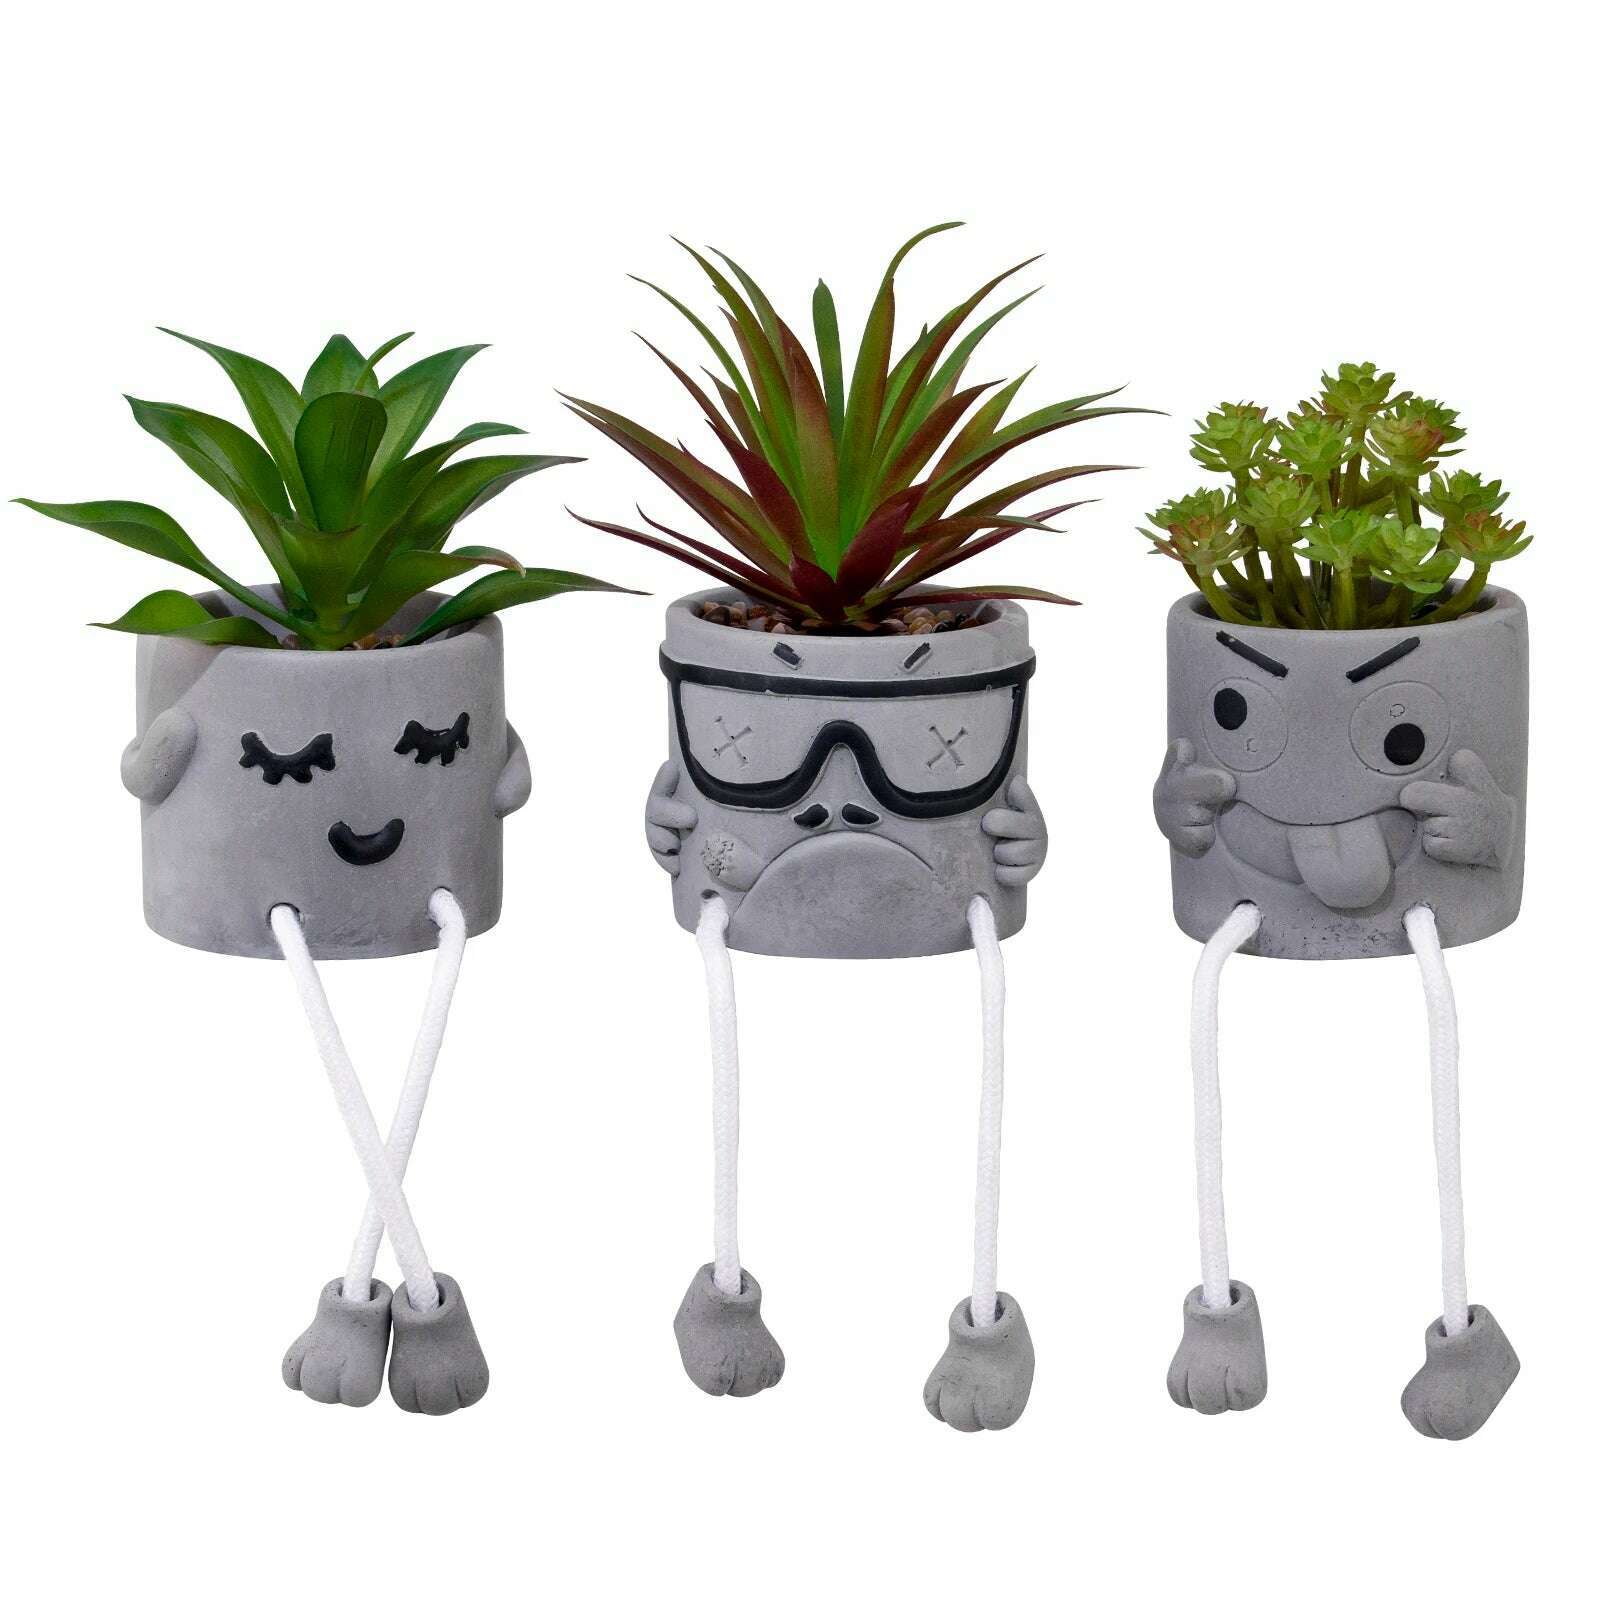 KIMLUD, 1 set of 3 pots of artificial succulent plants, cute hanging leg potted plants, creative artificial succulent plants and potted, Default Title, KIMLUD Womens Clothes